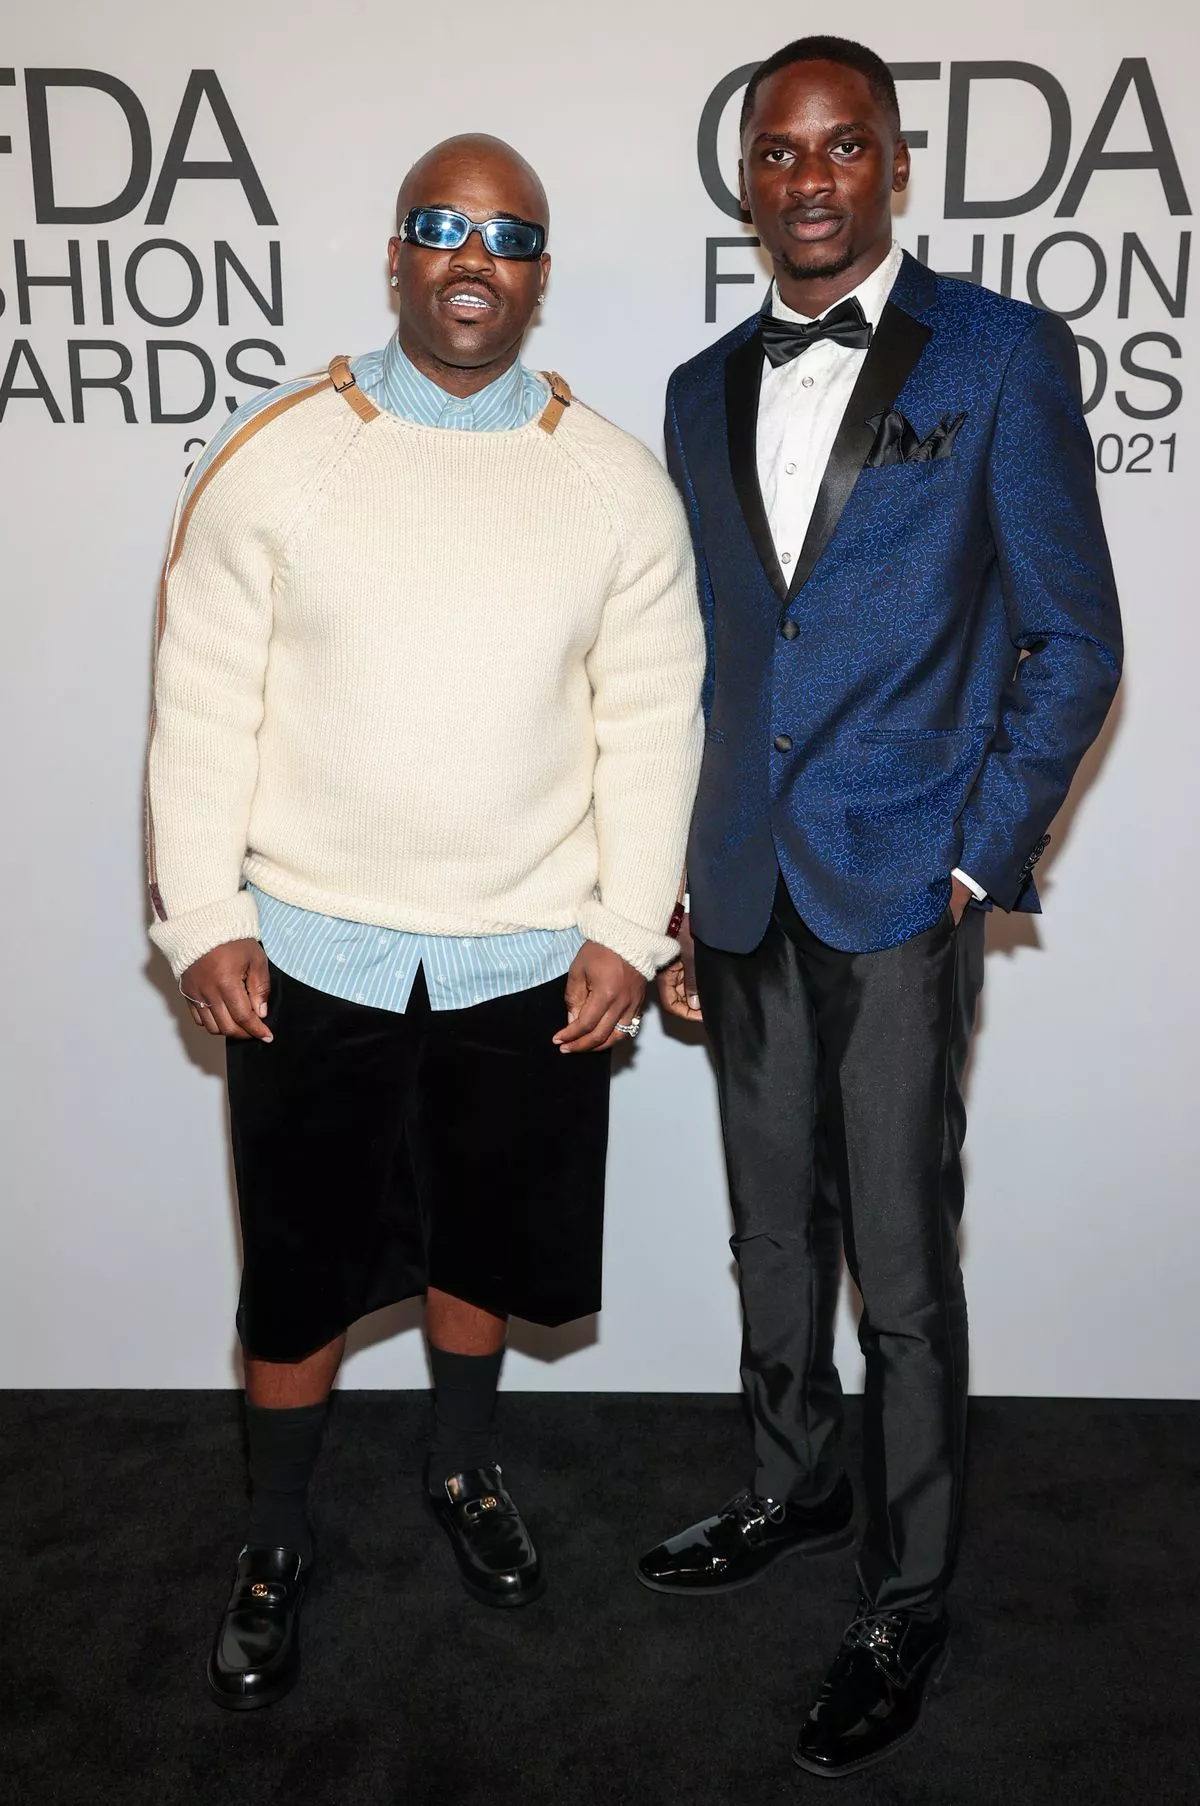 Эйсап Ферг (A$AP Ferg) (слева) на церемонии вручения наград CFDA Fashion Awards 2021